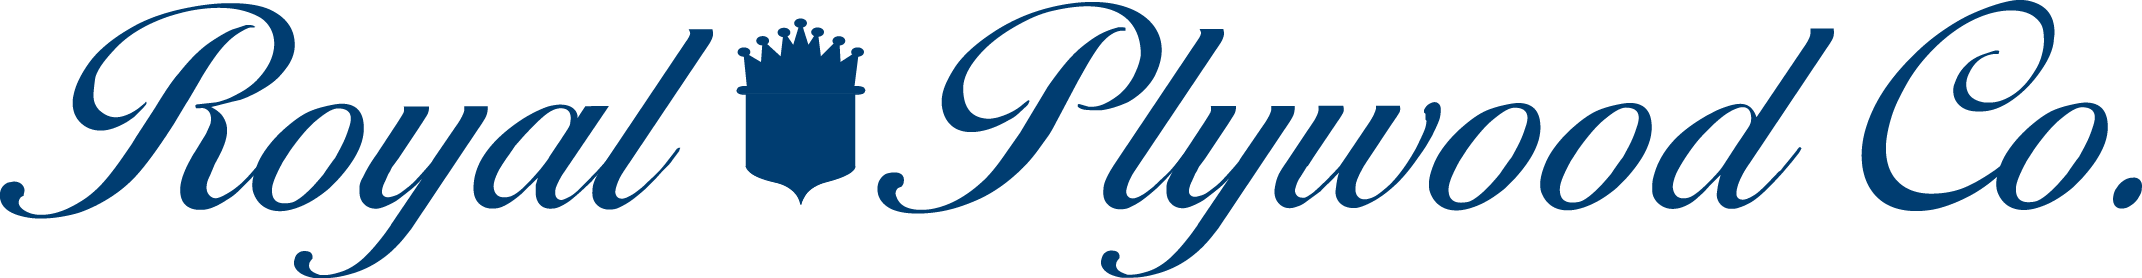 Royal Plywood Co. logo